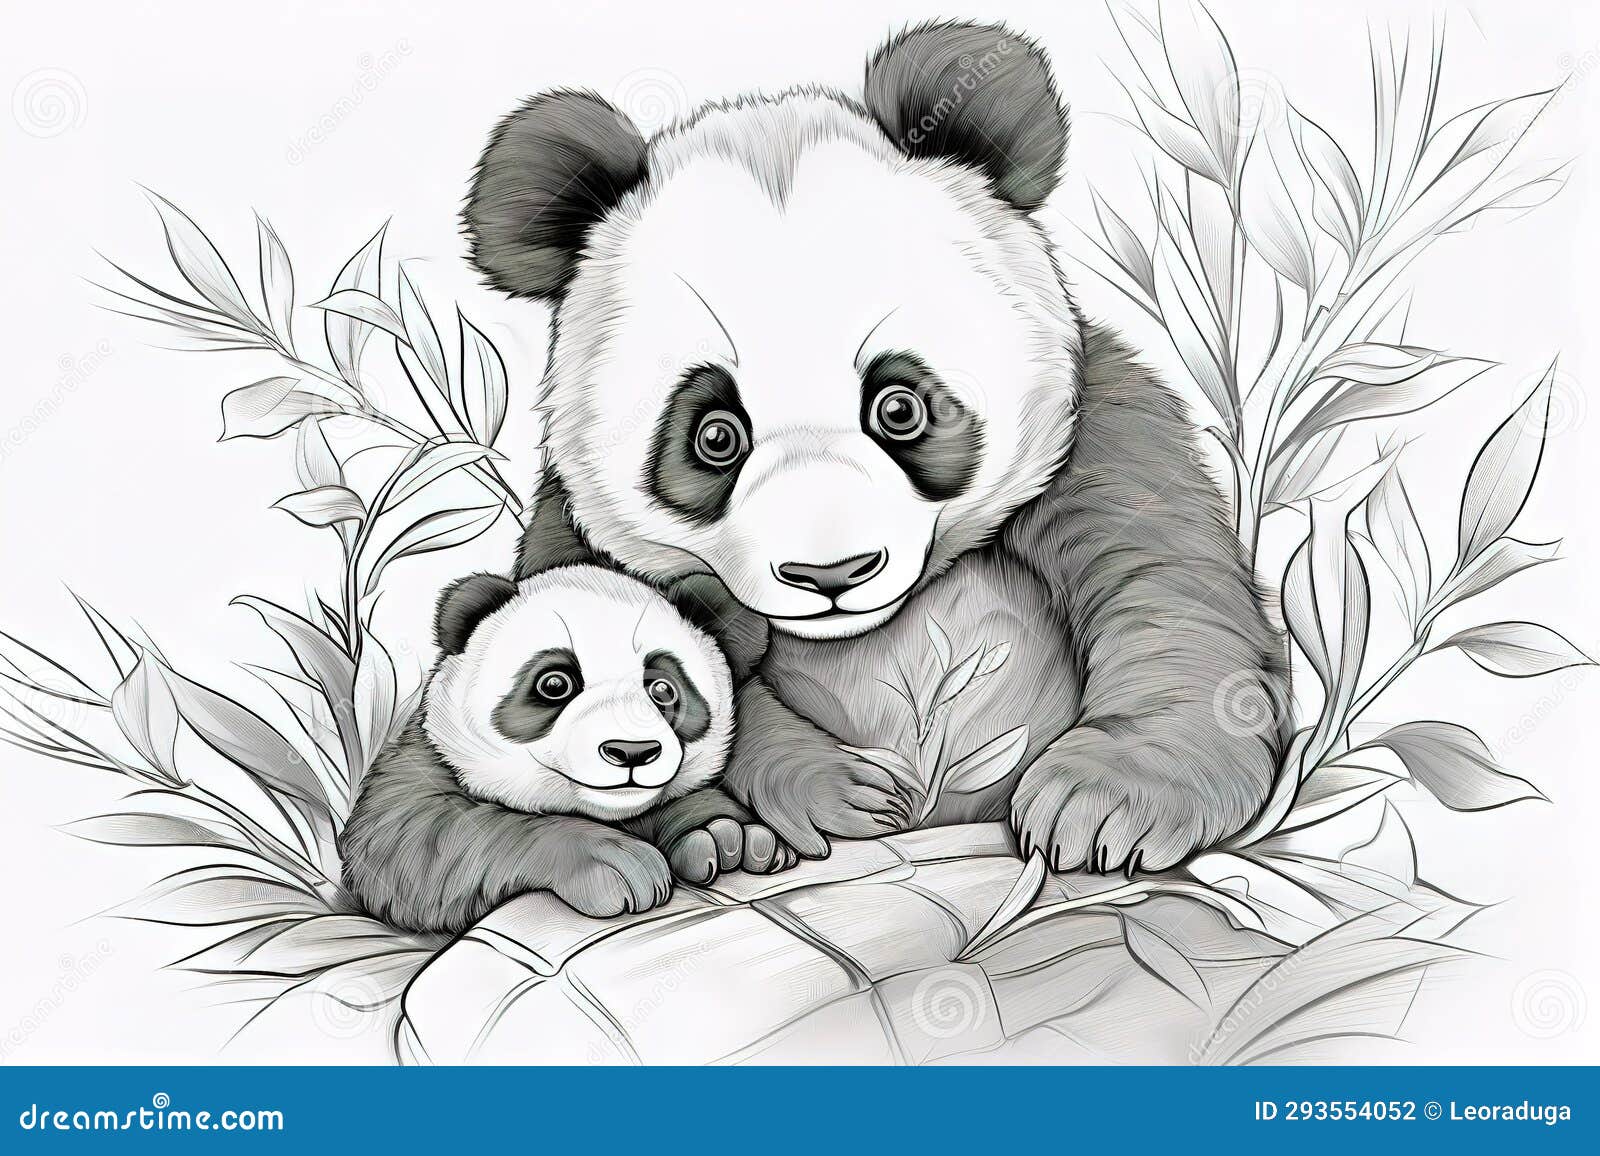 funny panda Drawing by pechane sumie | Saatchi Art